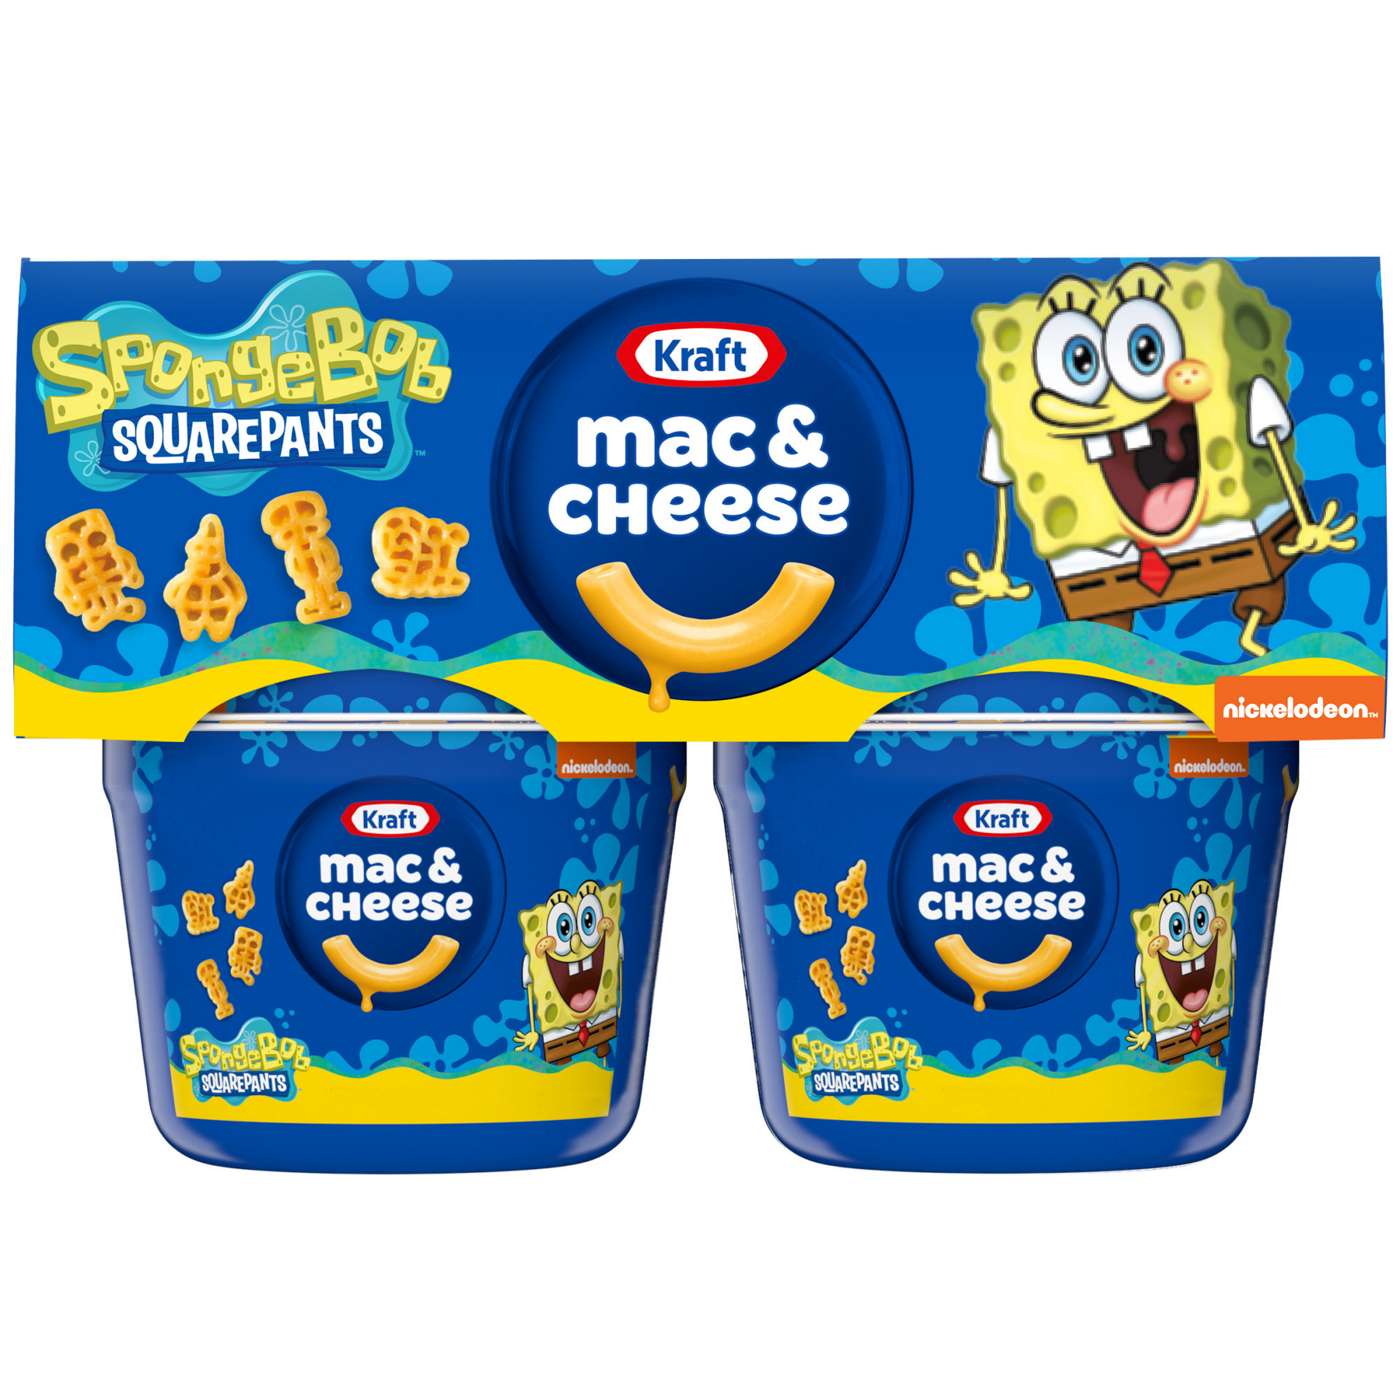 Kraft Spongebob Squarepants Macaroni & Cheese Dinner; image 1 of 3